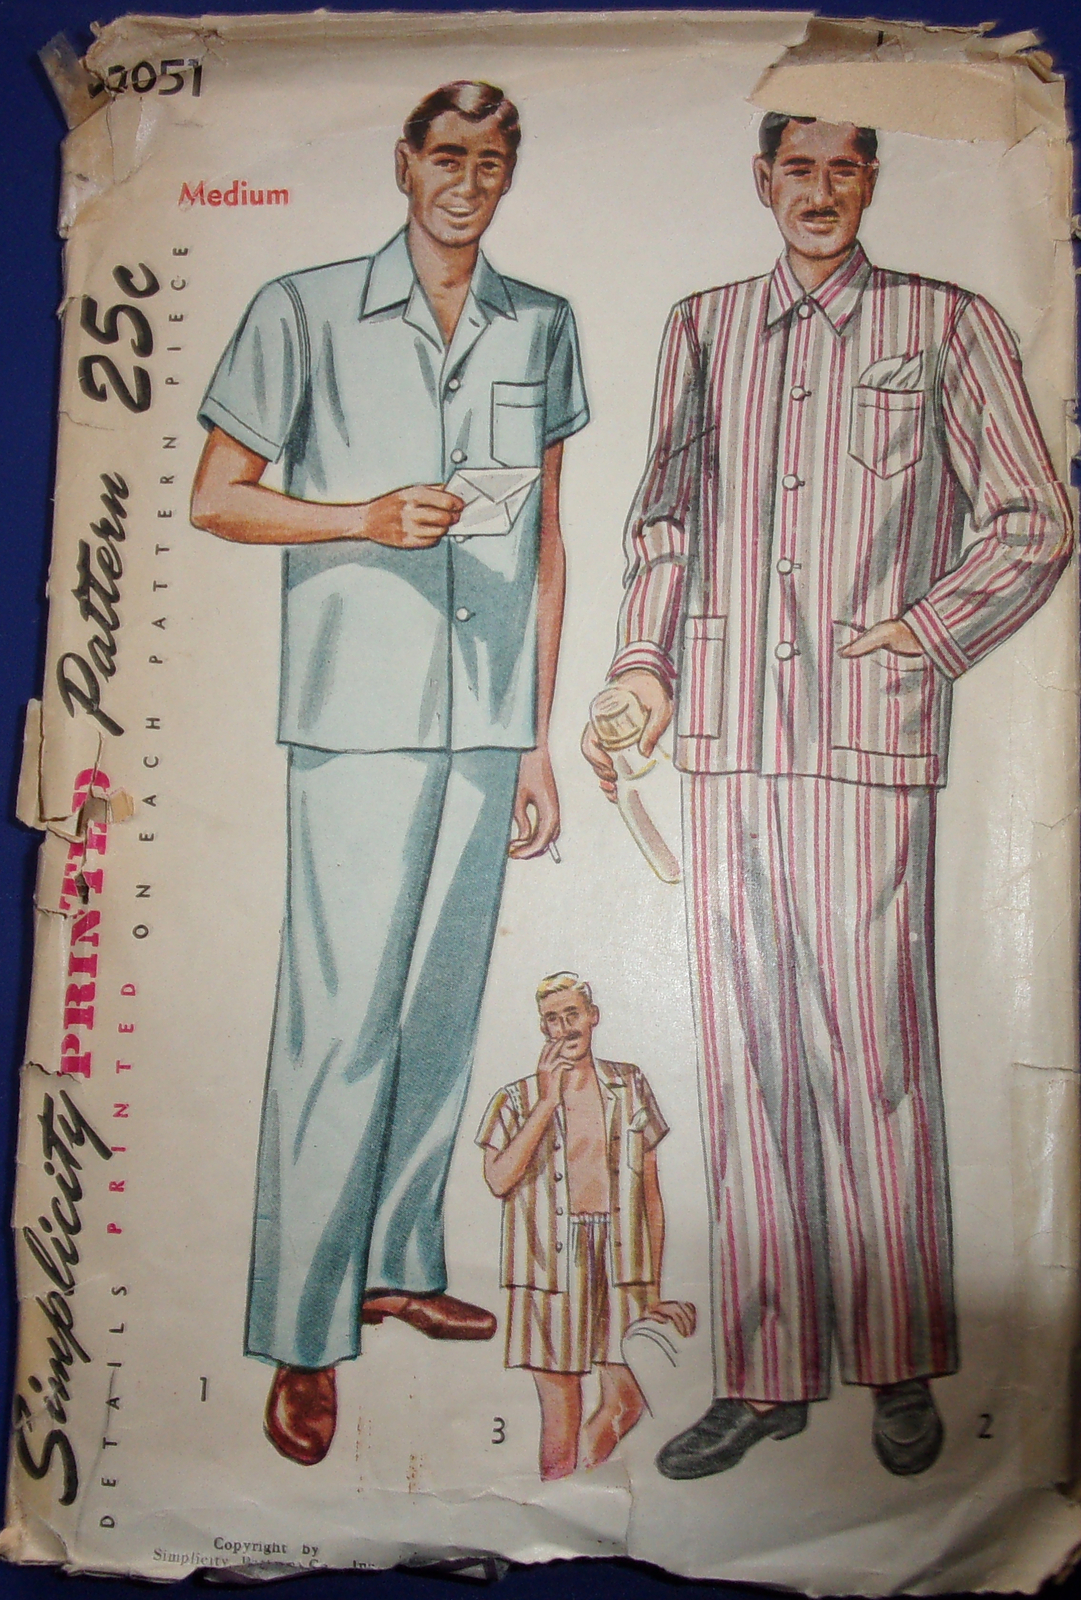 Primary image for Vintage Simplicity Men’s Pajamas Size Medium #2051